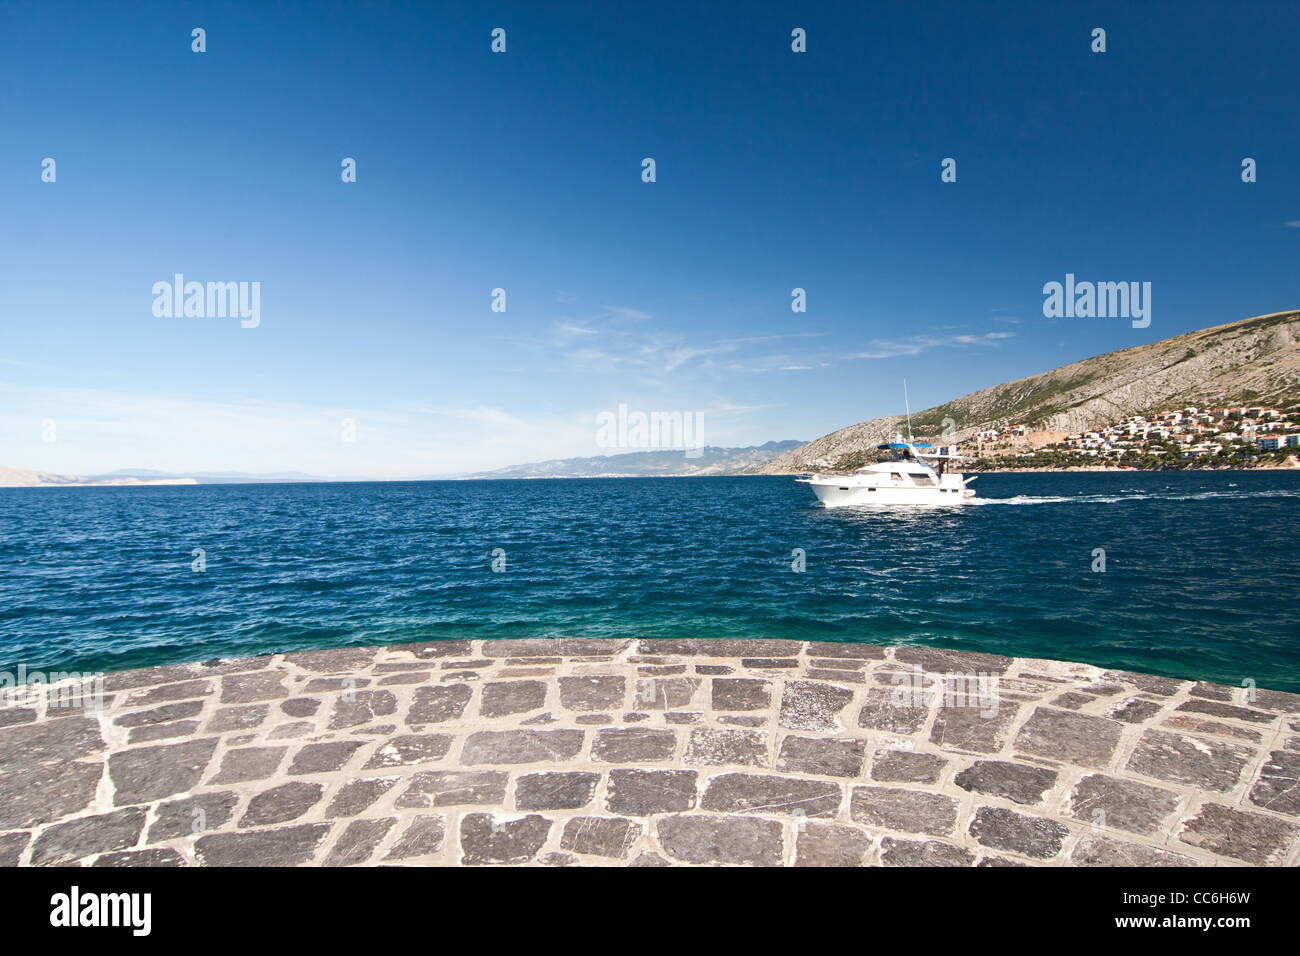 the mole and sea with ship in city Senj - Croatia Stock Photo